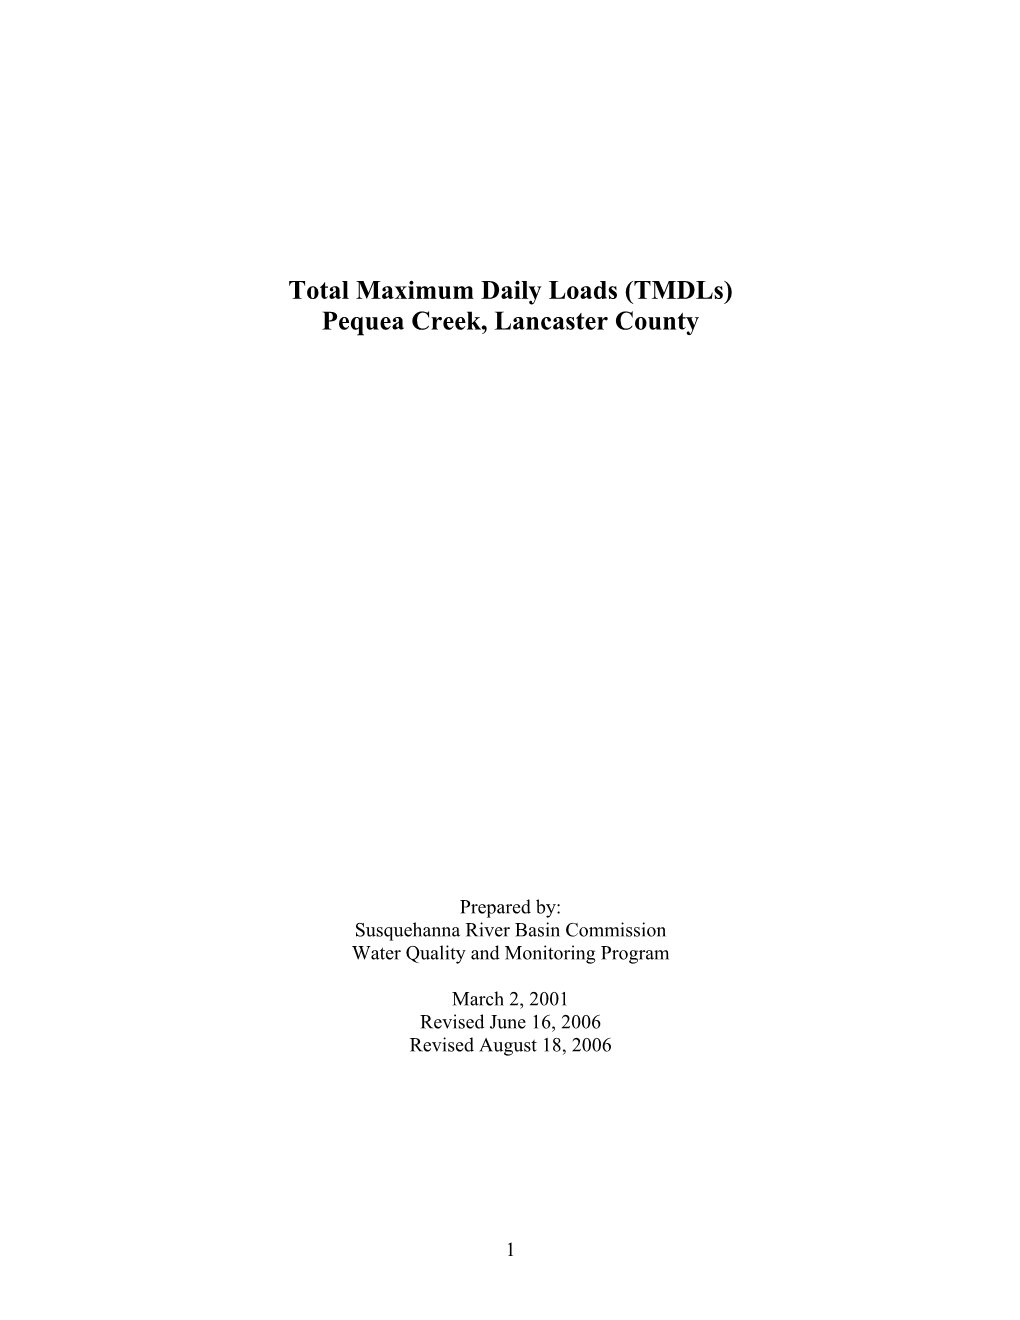 Total Maximum Daily Loads (Tmdls) Pequea Creek, Lancaster County